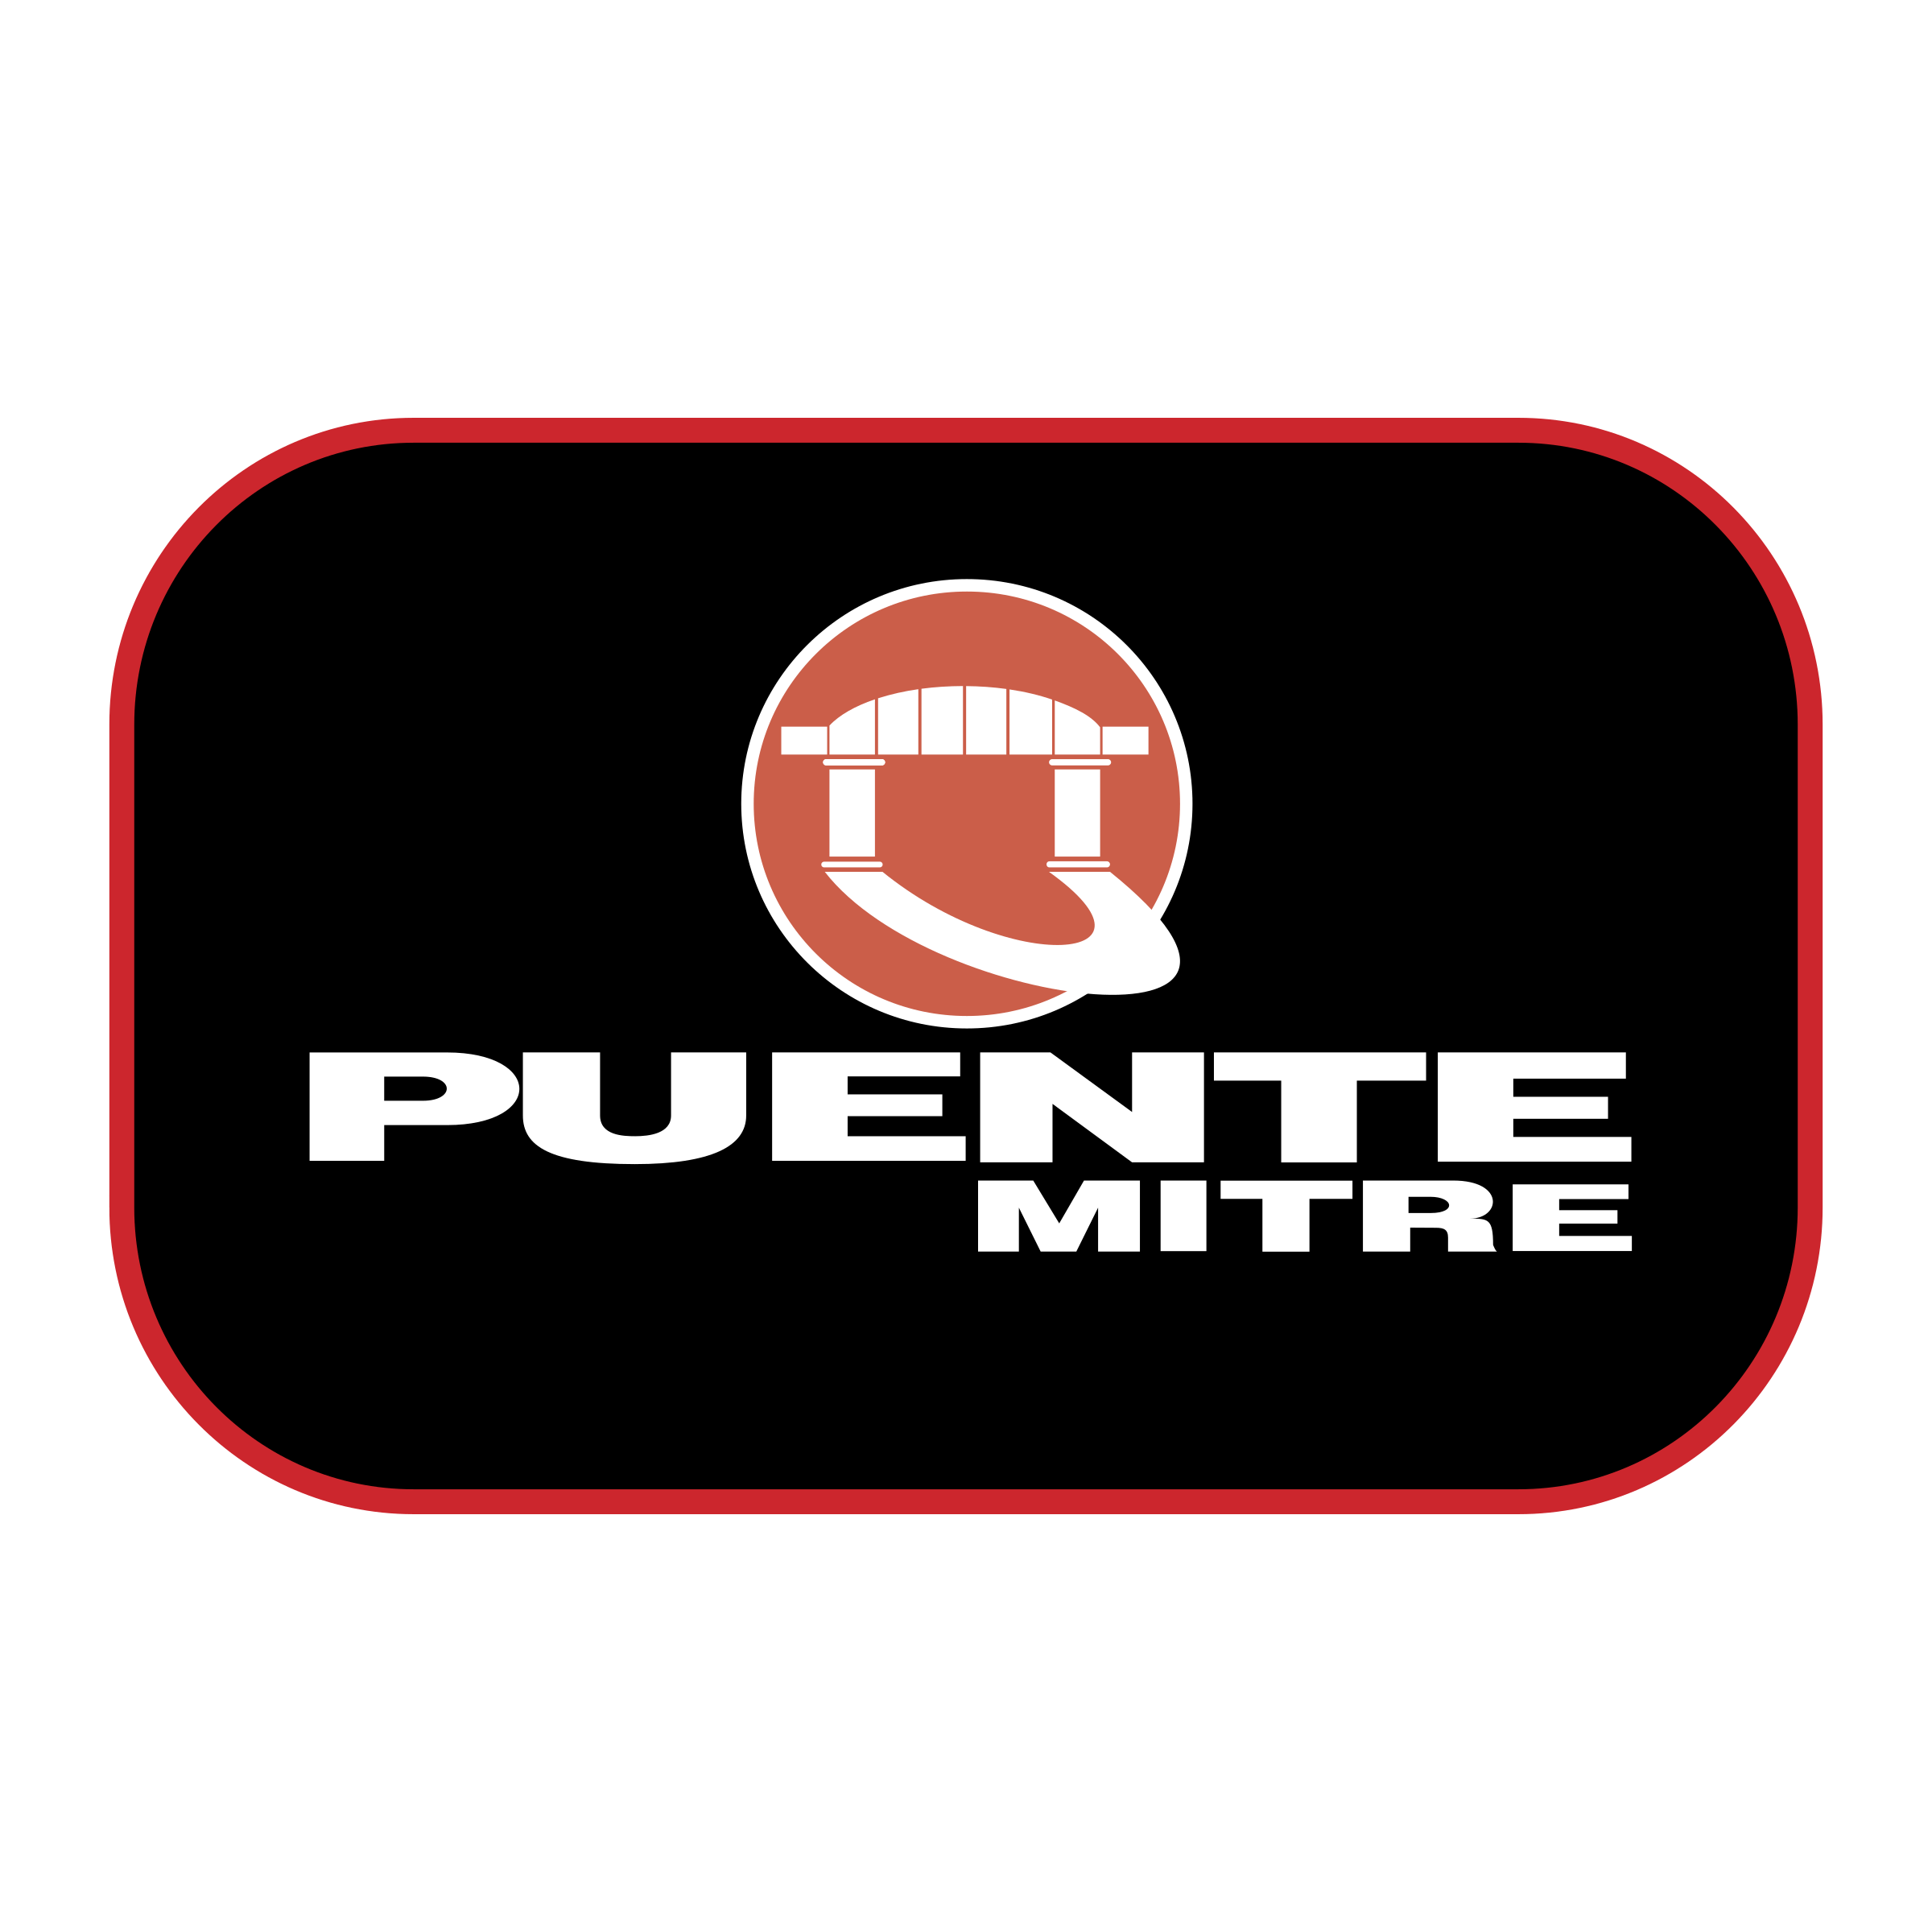 Mitre Logo - Puente Mitre Logo PNG Transparent & SVG Vector - Freebie Supply